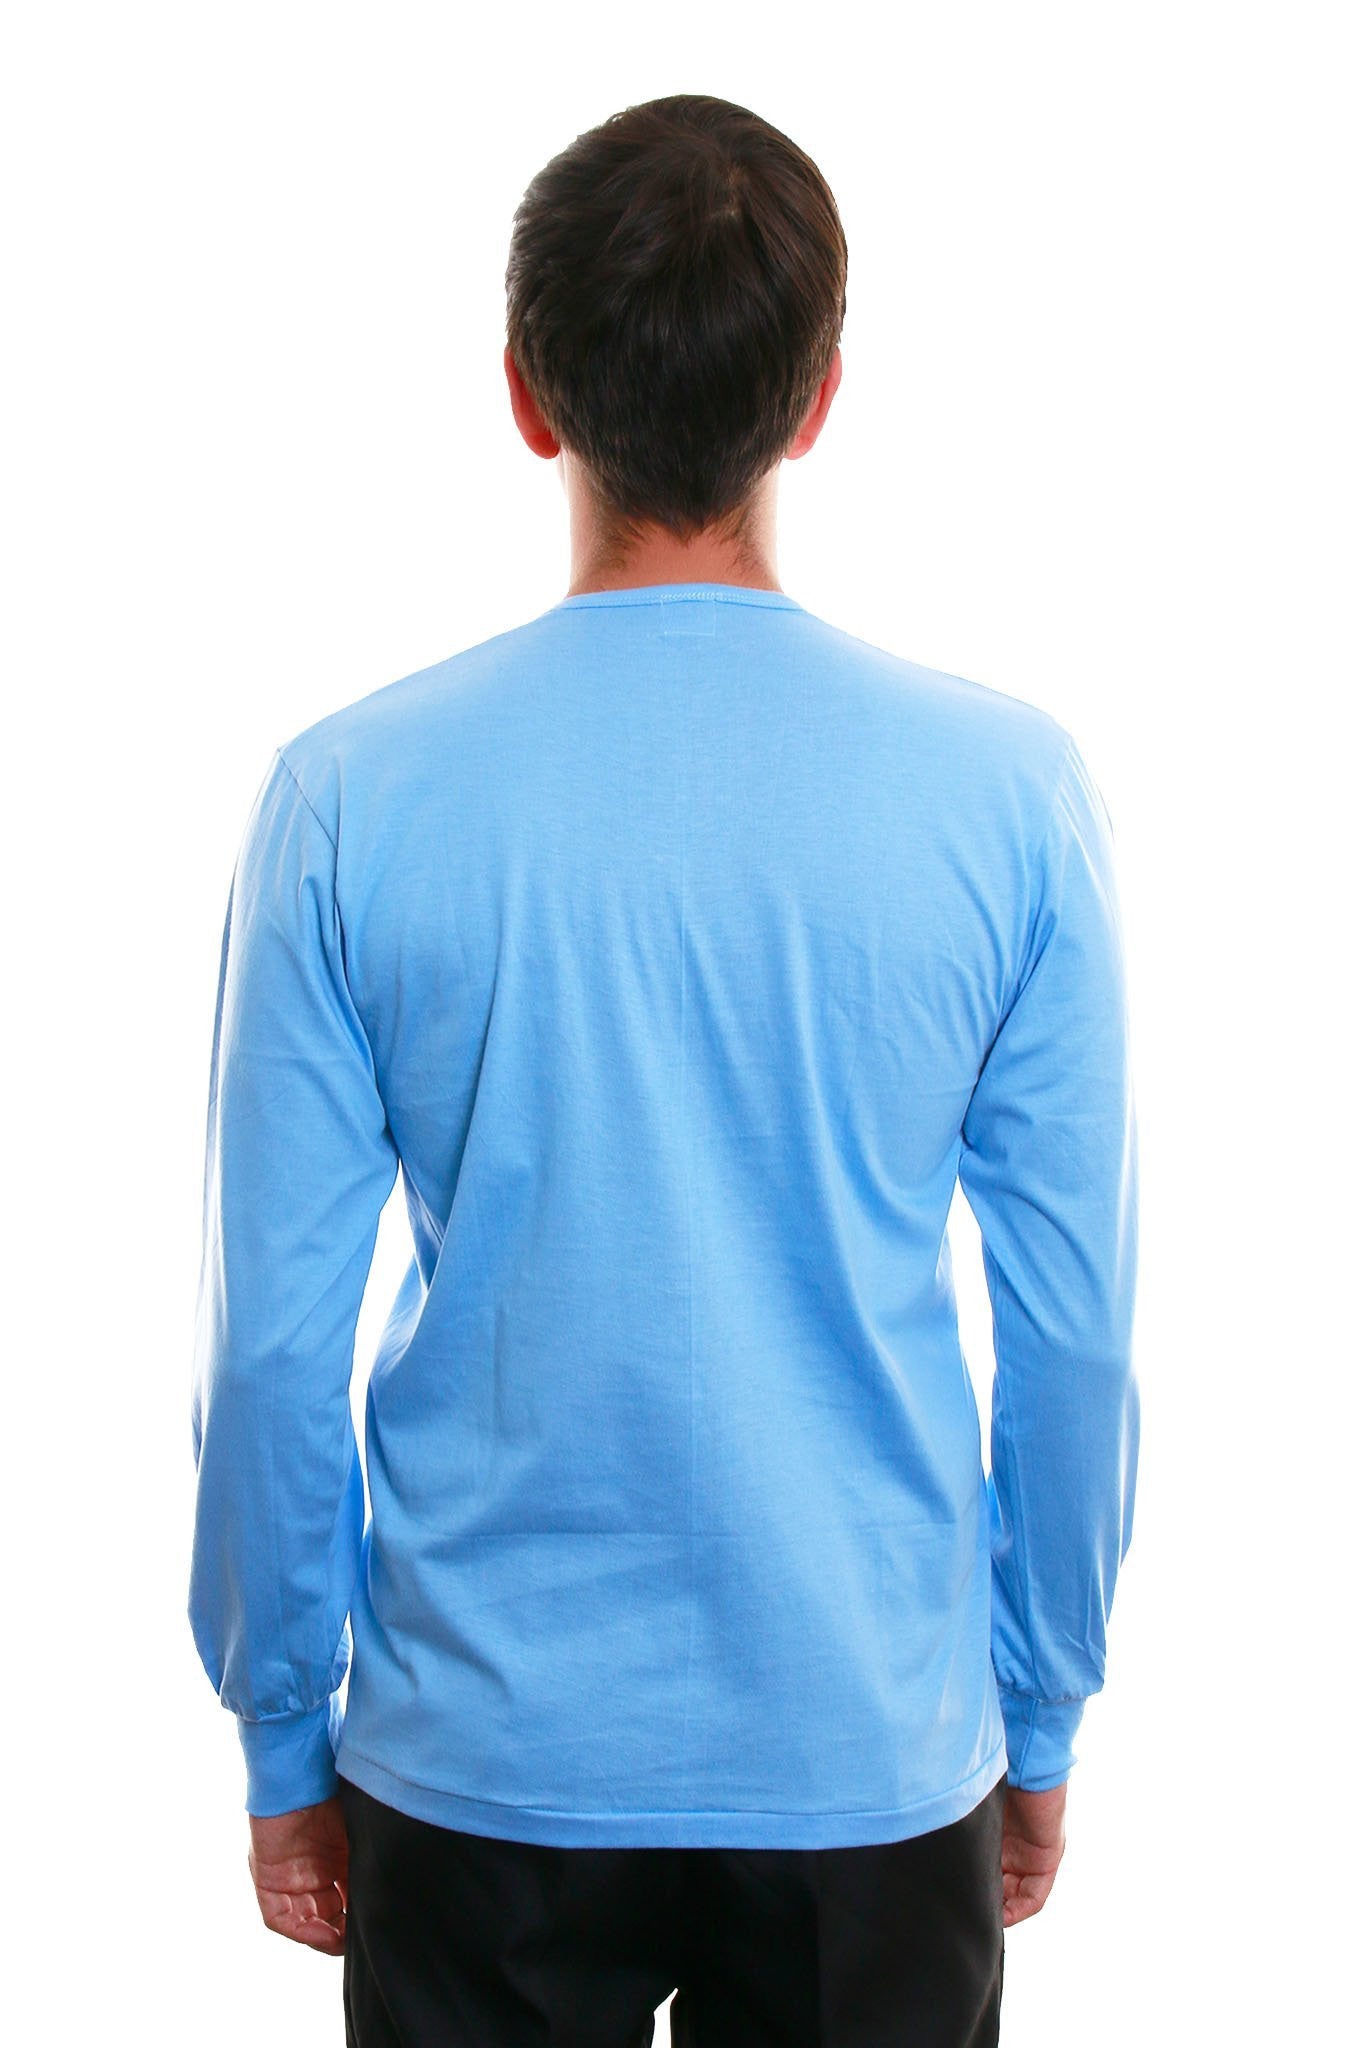 MUL5 - Camisa de Chino - Long-Sleeve - Powder Blue